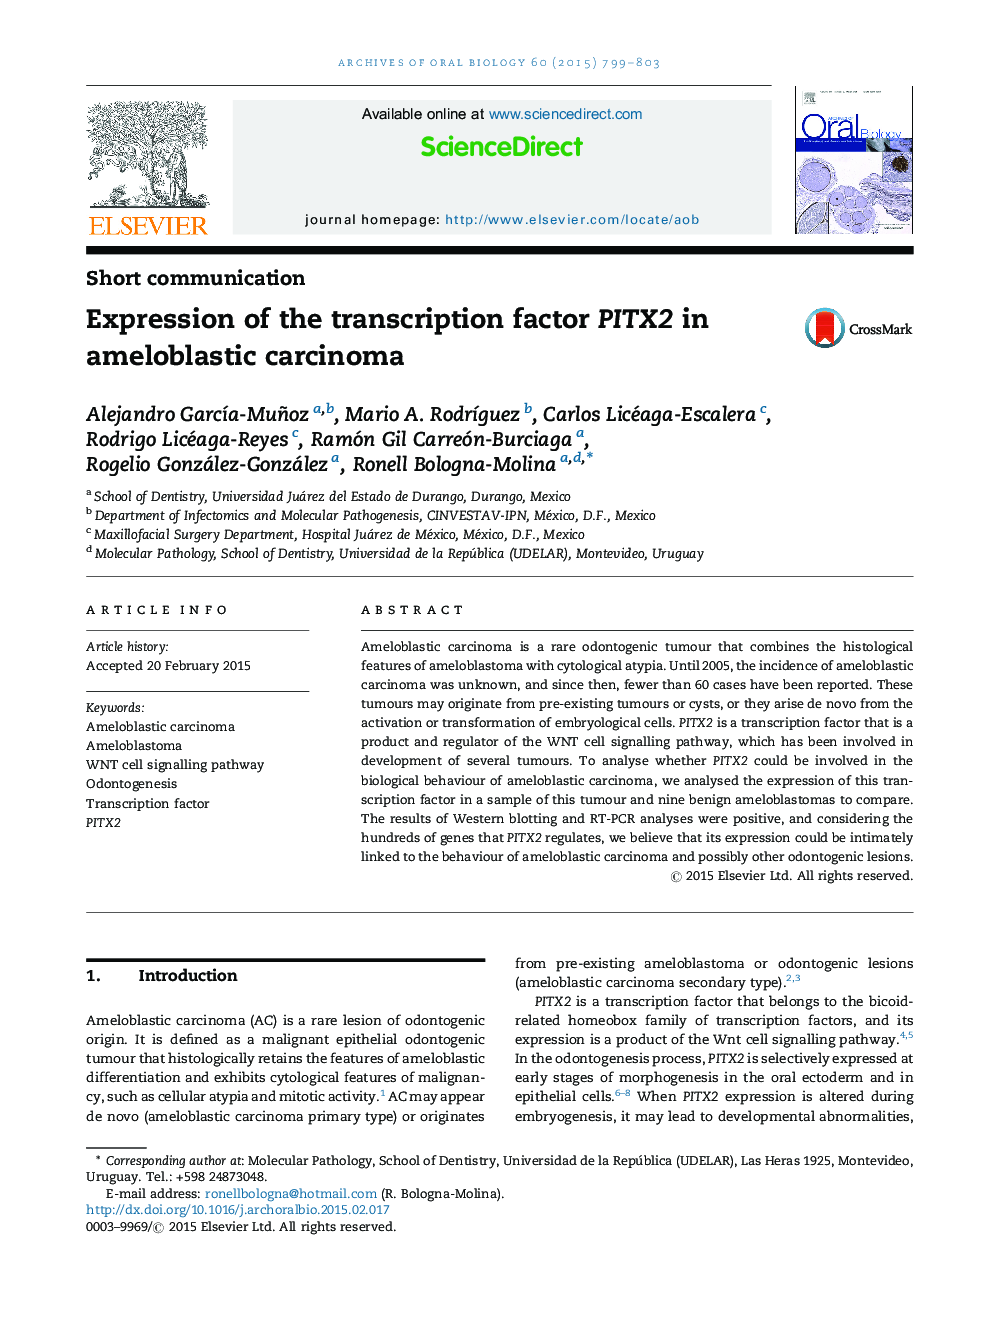 Expression of the transcription factor PITX2 in ameloblastic carcinoma